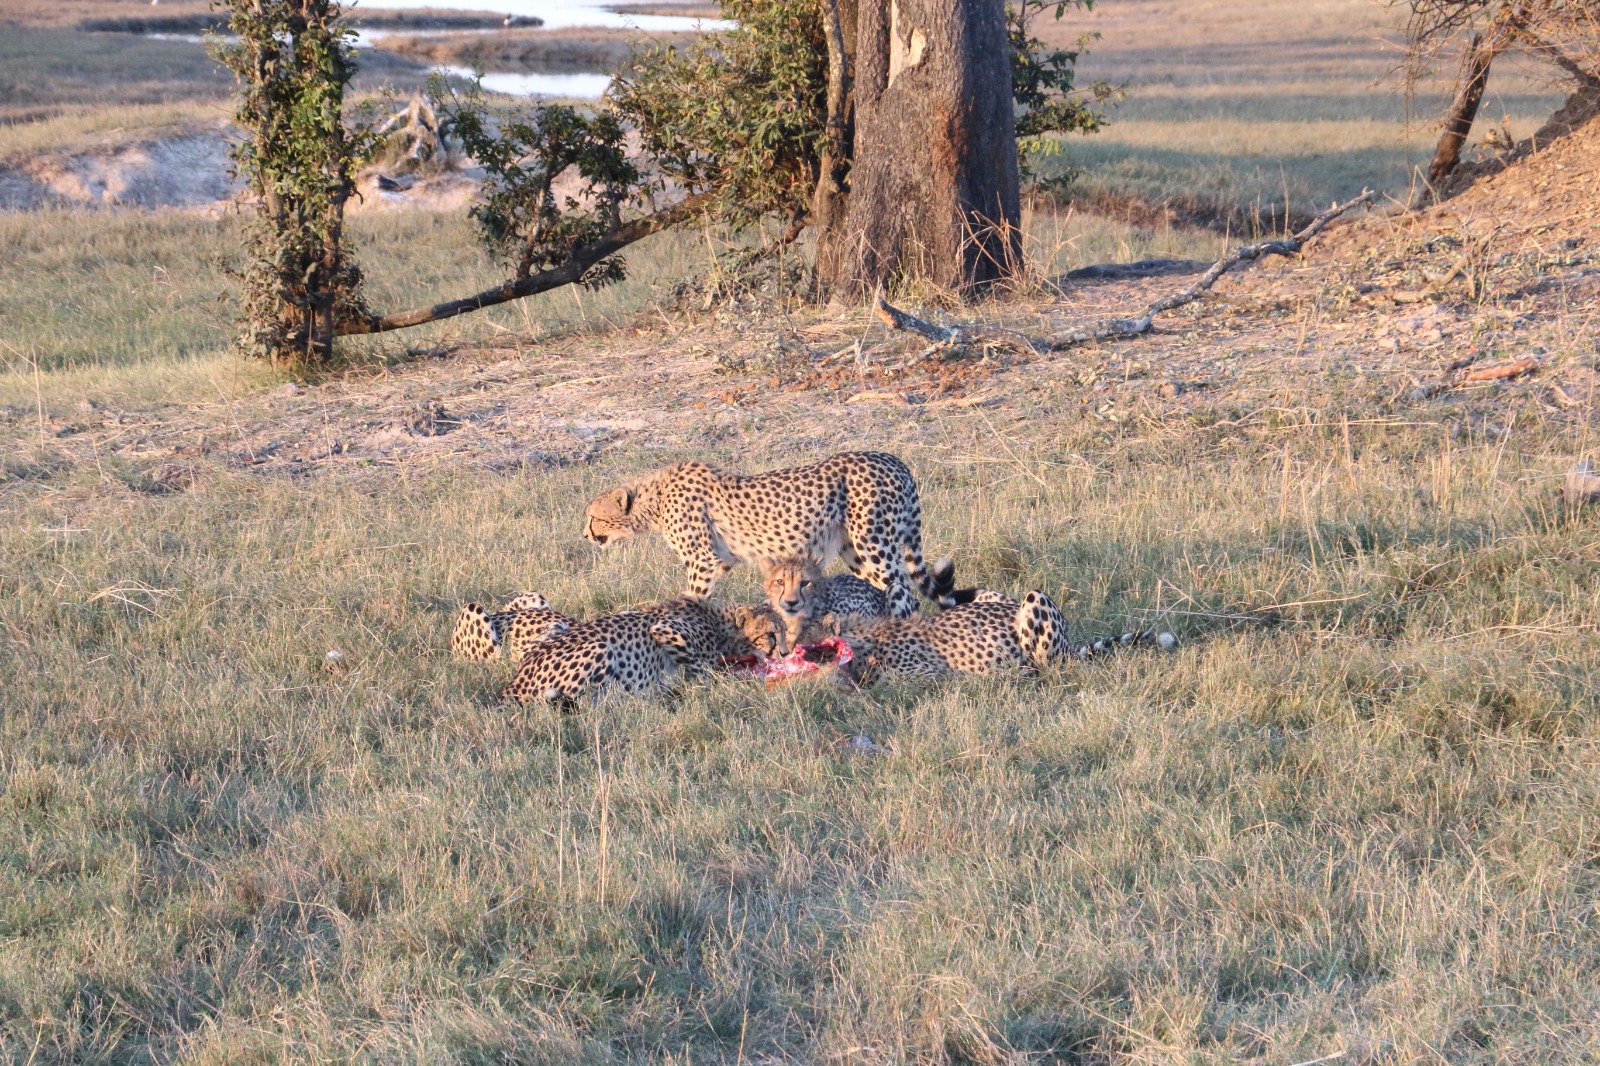 Nkala cheetah family eating